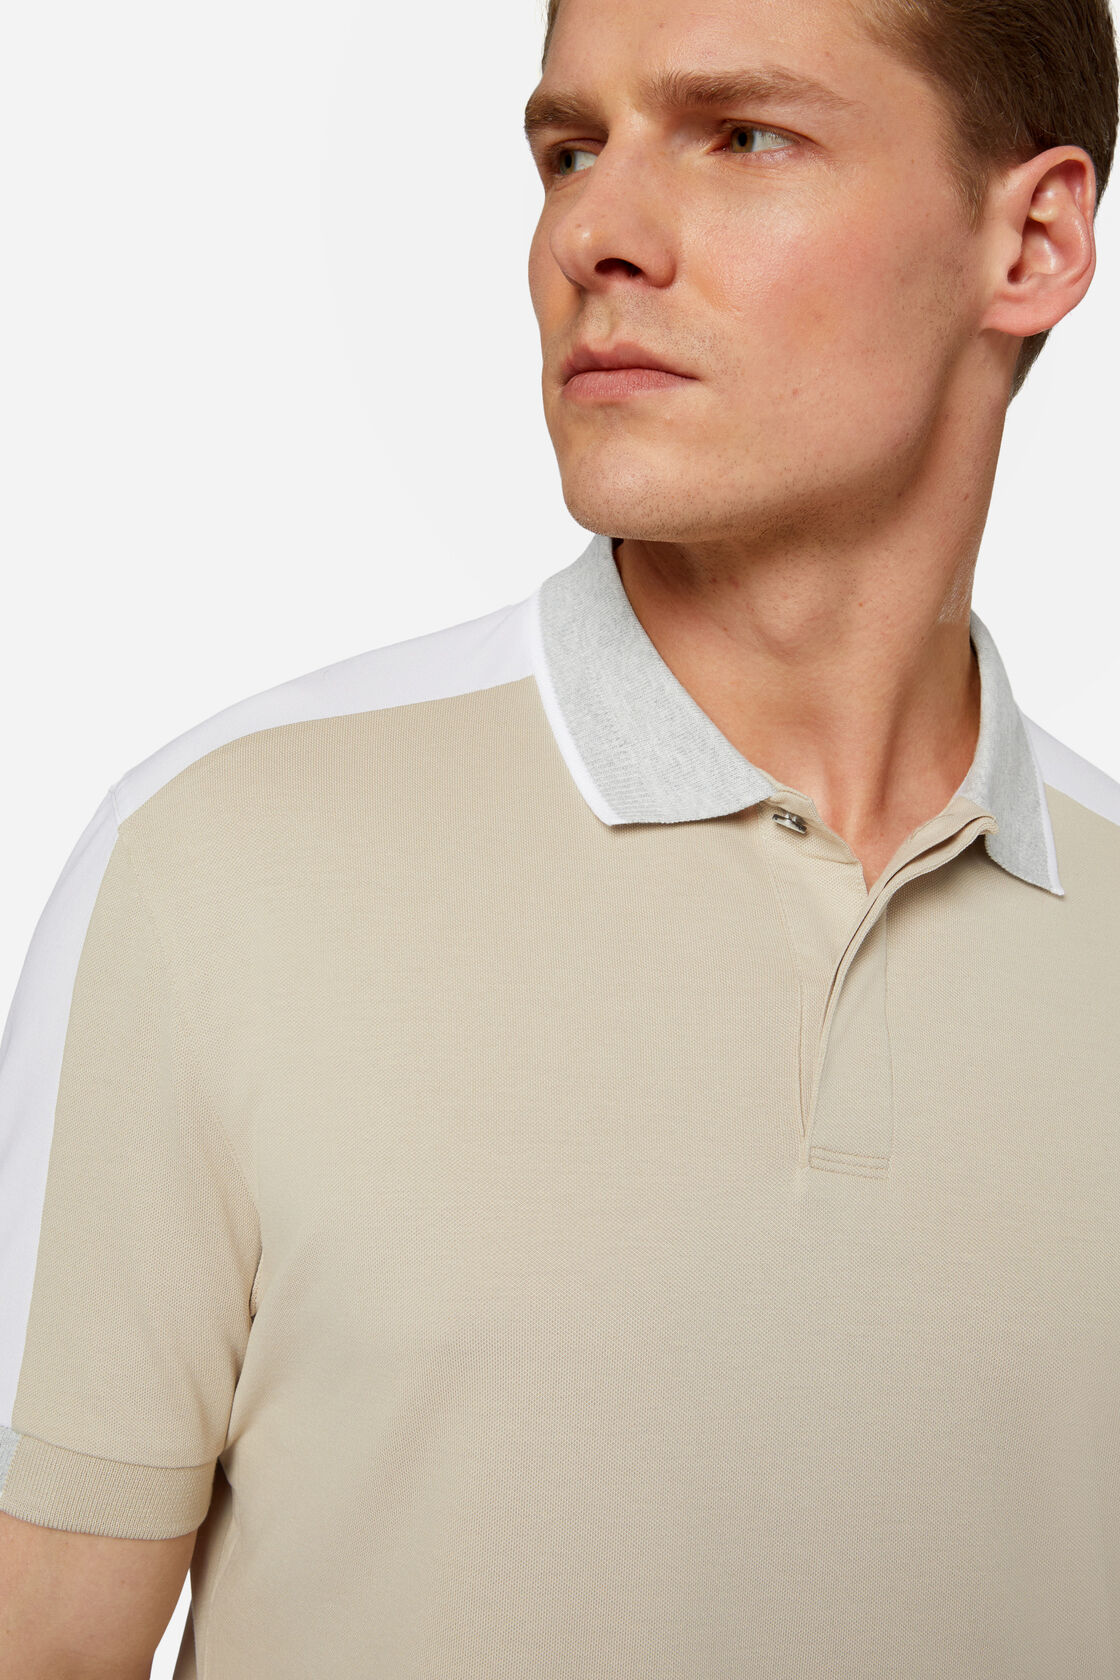 Hochwertiges Piqué-Poloshirt, Beige, hi-res